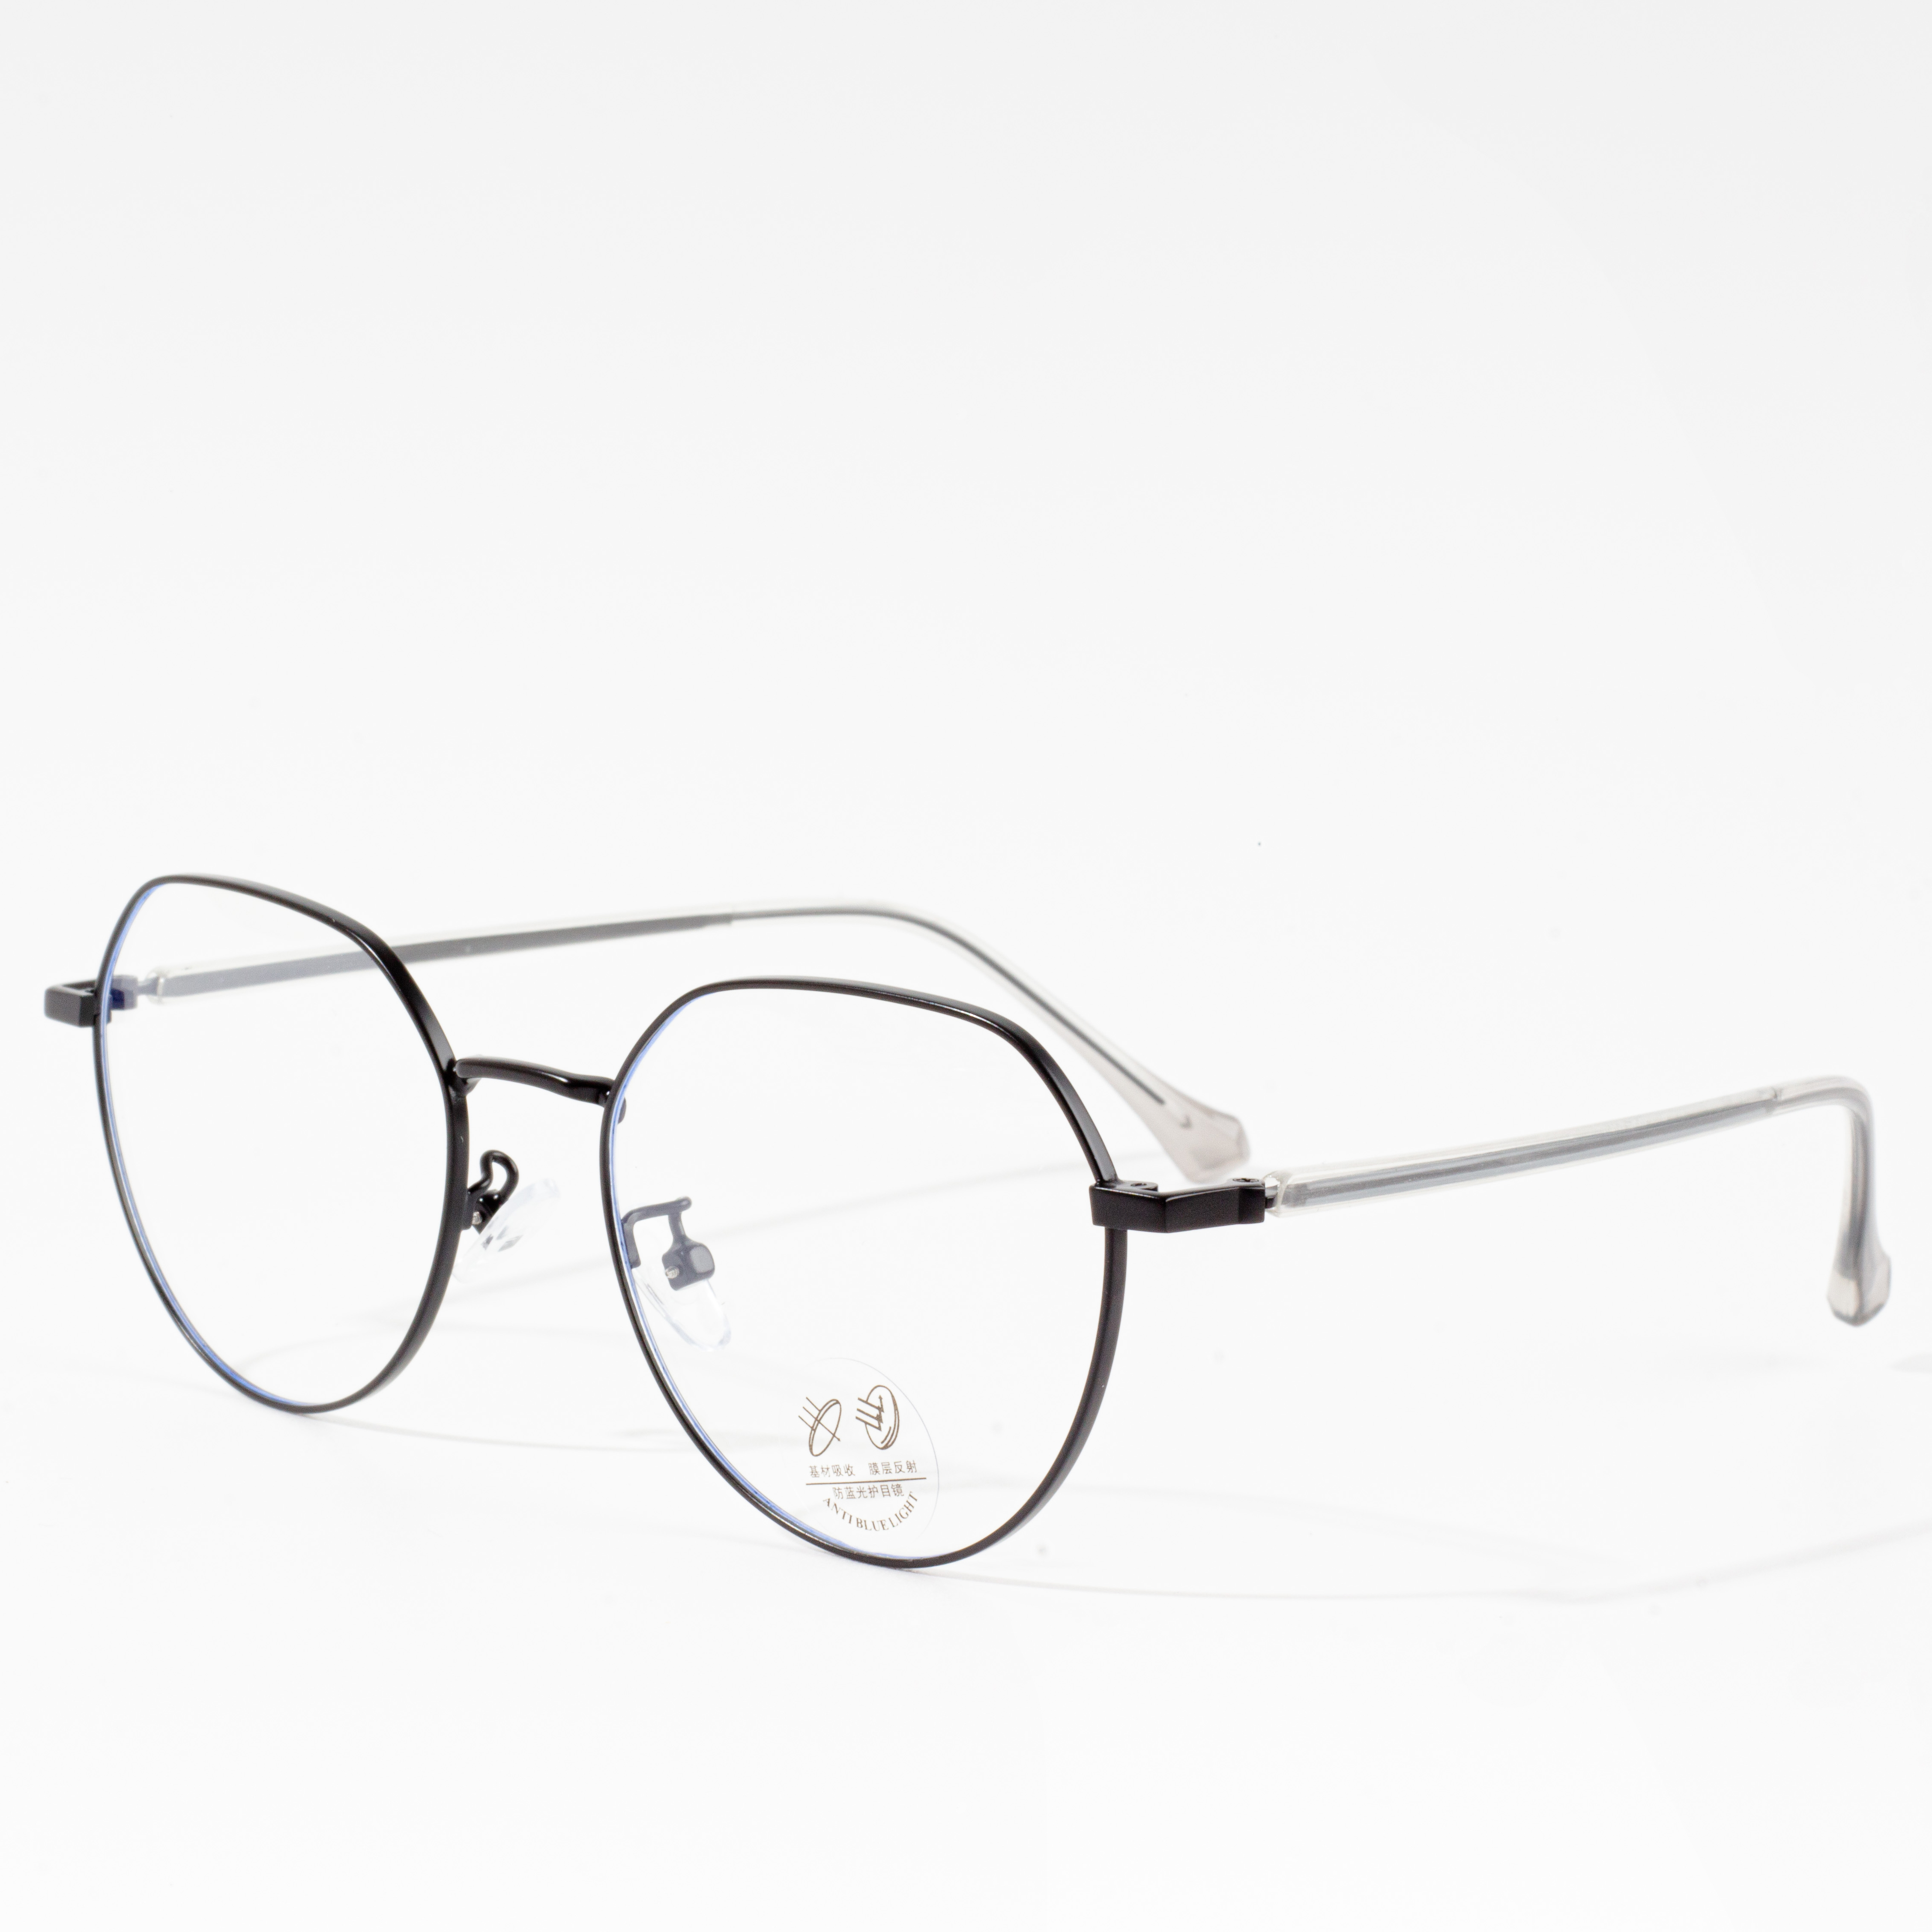 Designer-Brillengestelle aus Metall